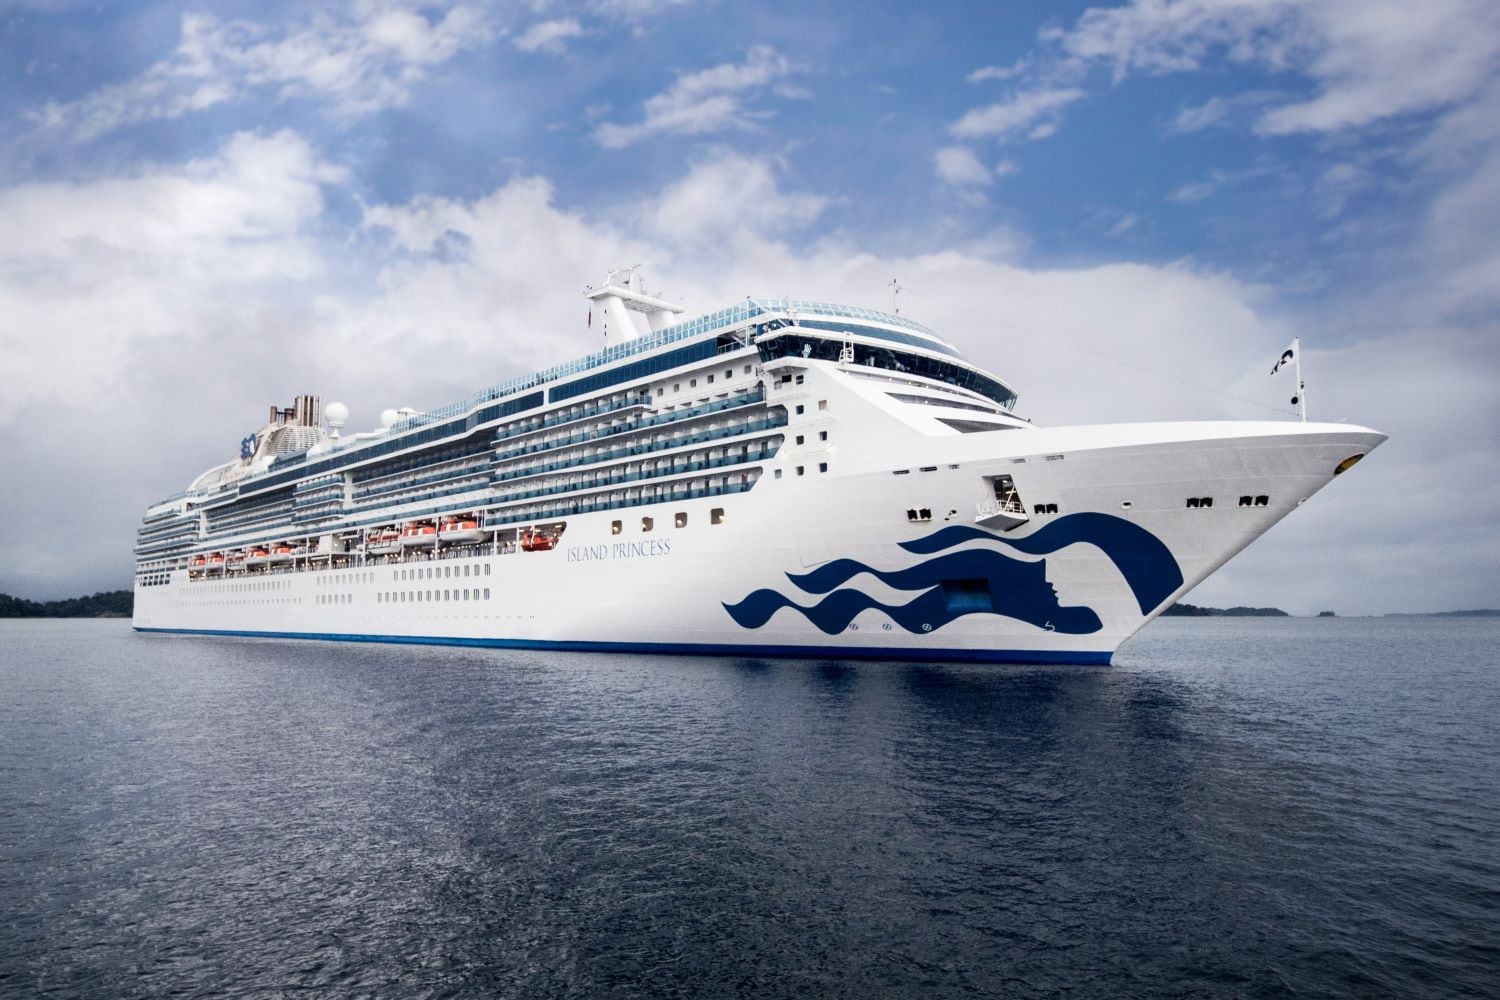 Princess Cruises - World Cruise Liner – Mediterranean and